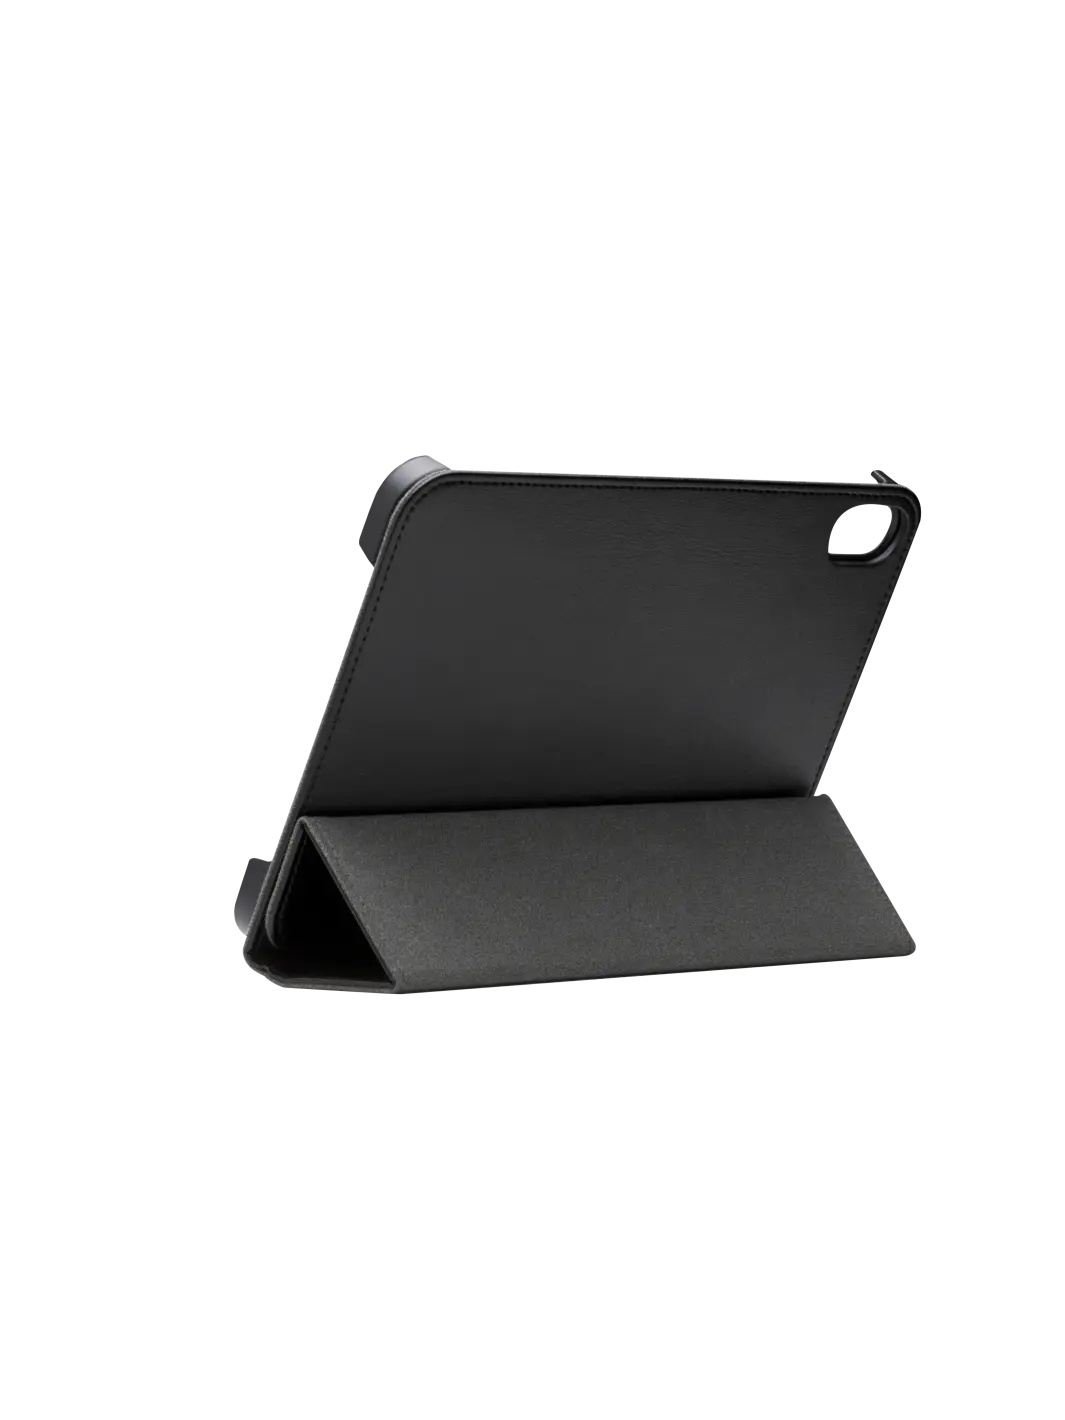 Oslo iPad case